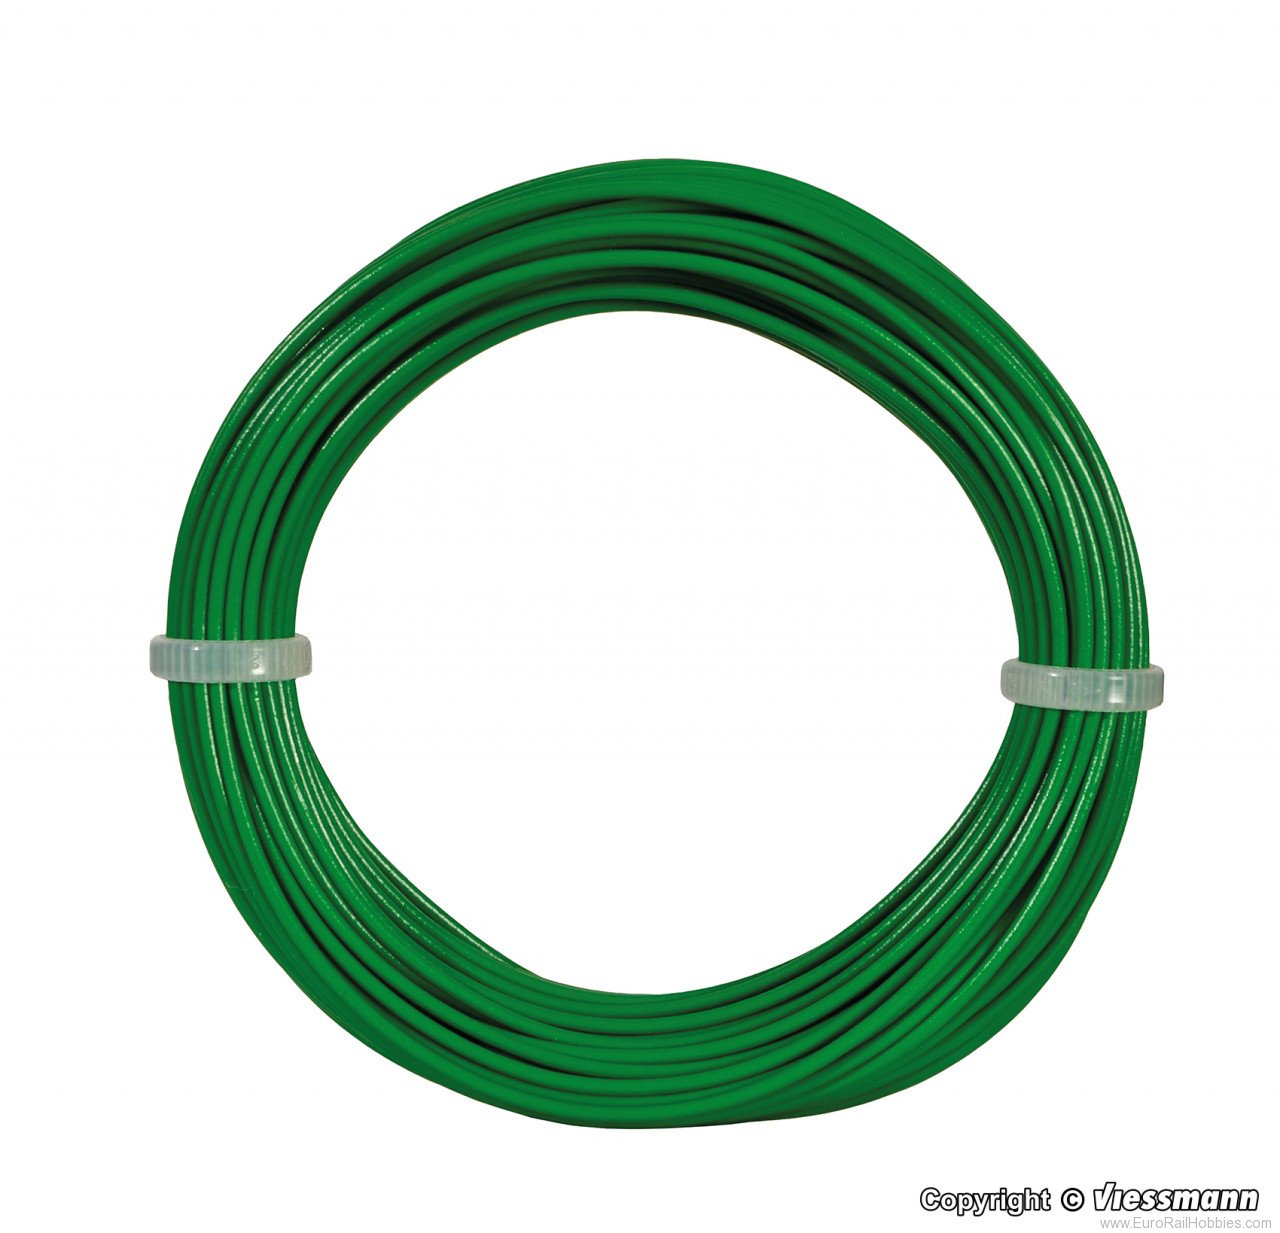 Viessmann 6866 Wire,0,14 mm dia., green, 10 m